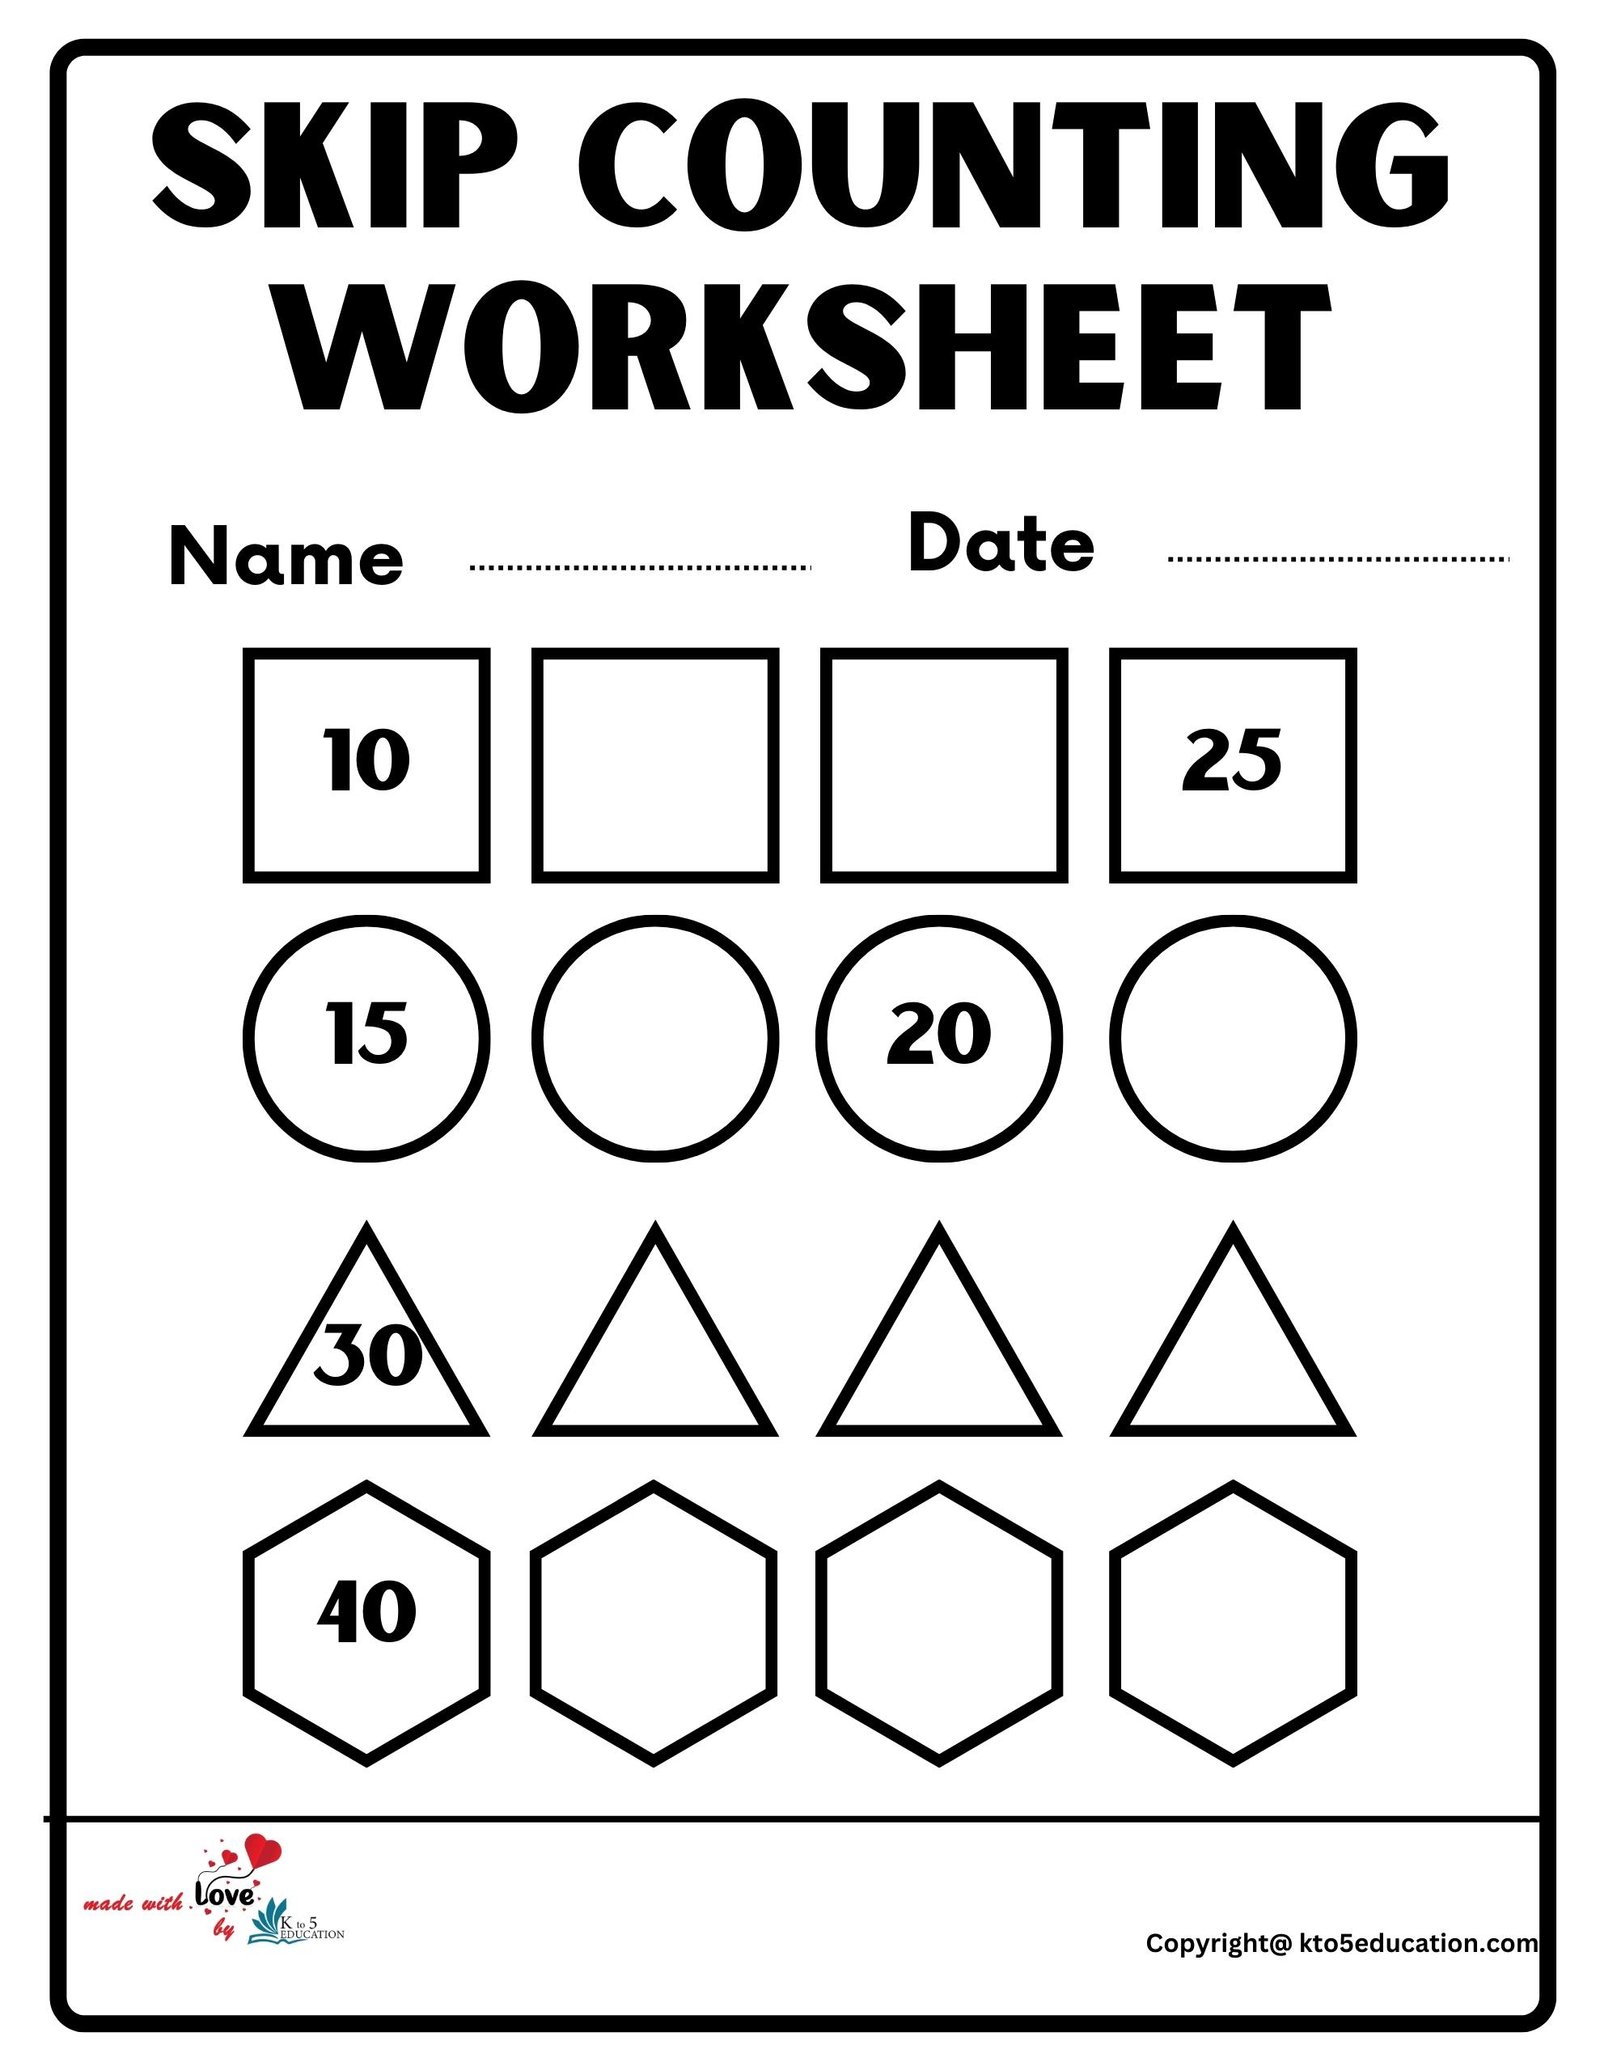 Skip Counting Worksheet 2